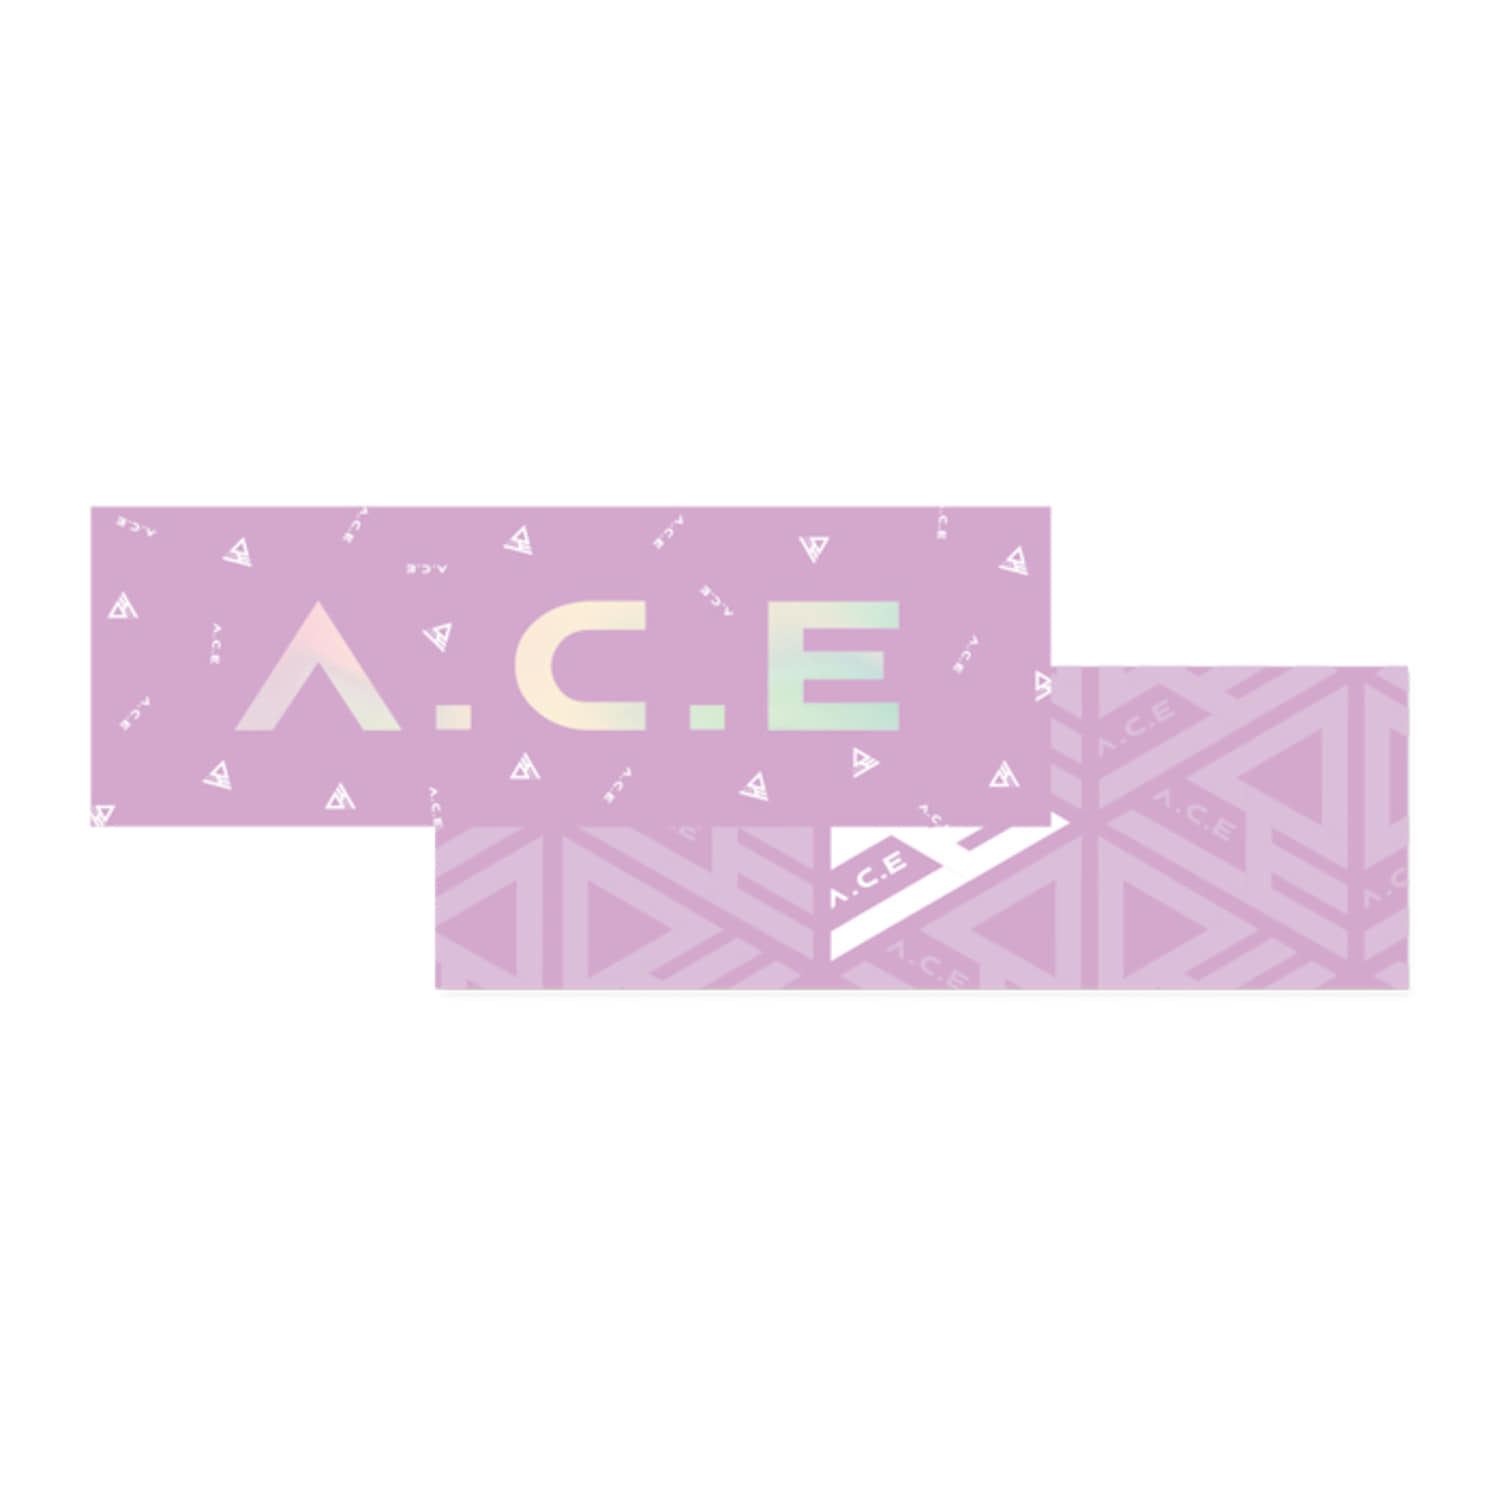 A.C.E (에이스) - OFFICIAL GOODS [홀로그램 슬로건 / Hologram Slogan]